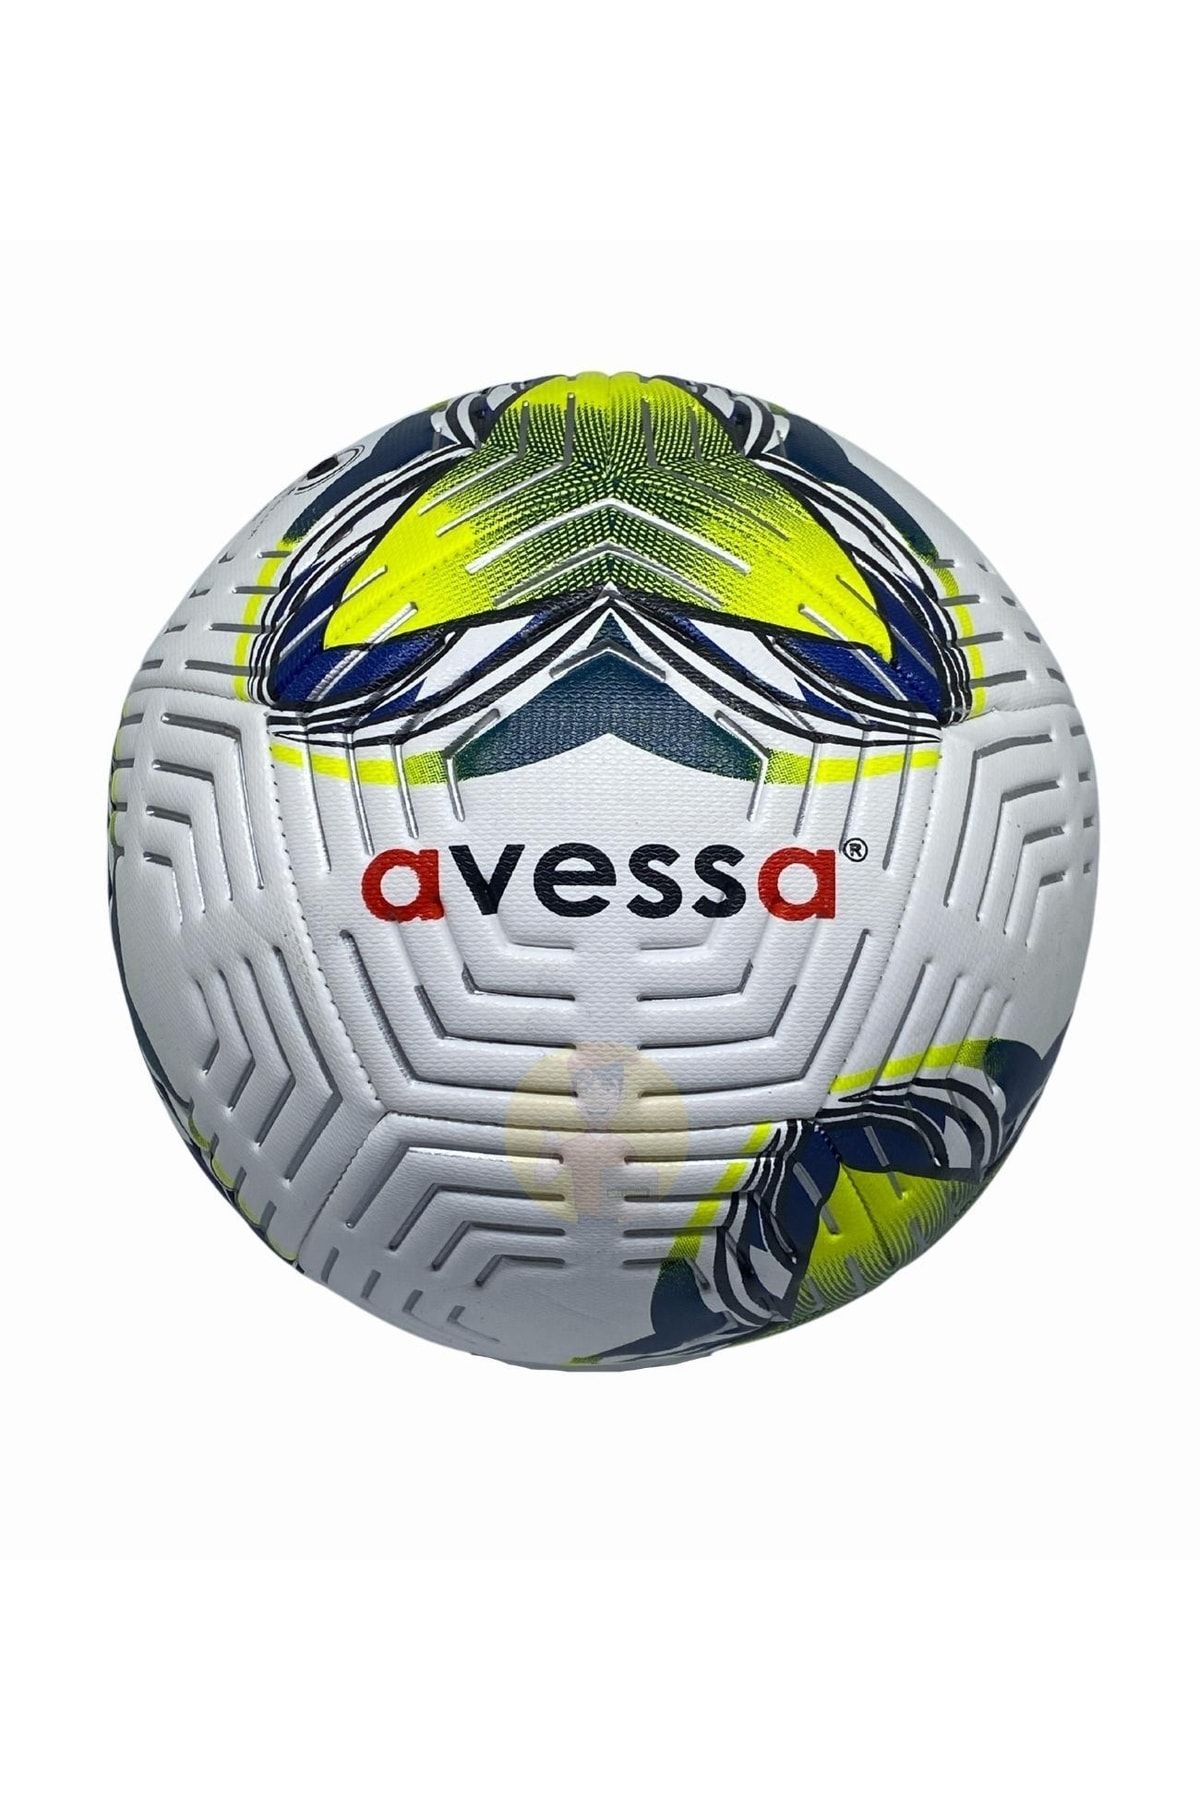 Avessa Bsf-015 Renkli Halı Saha Futbol Topu 5 Numara Dikişli